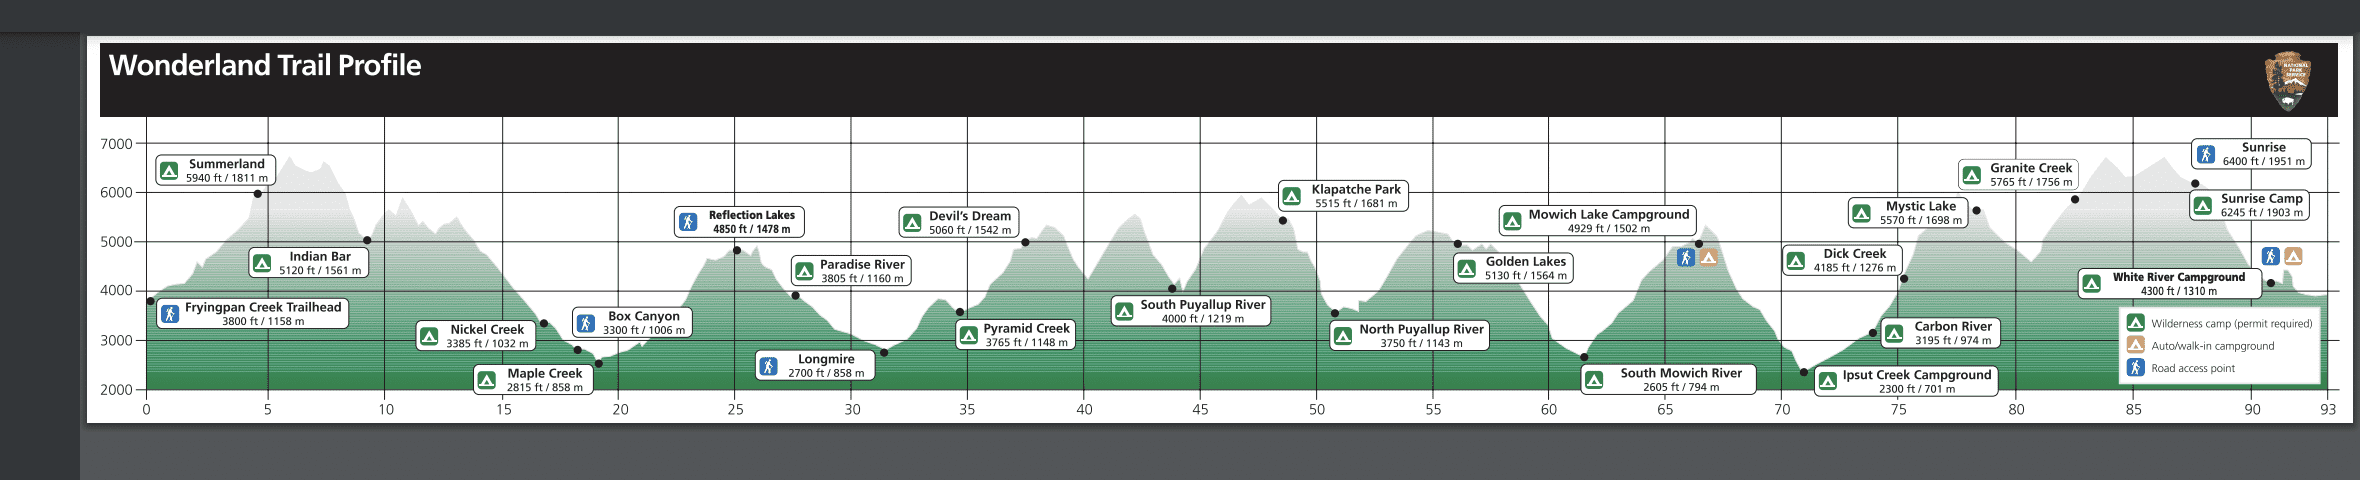 Wonderland Trail Elevation Profile